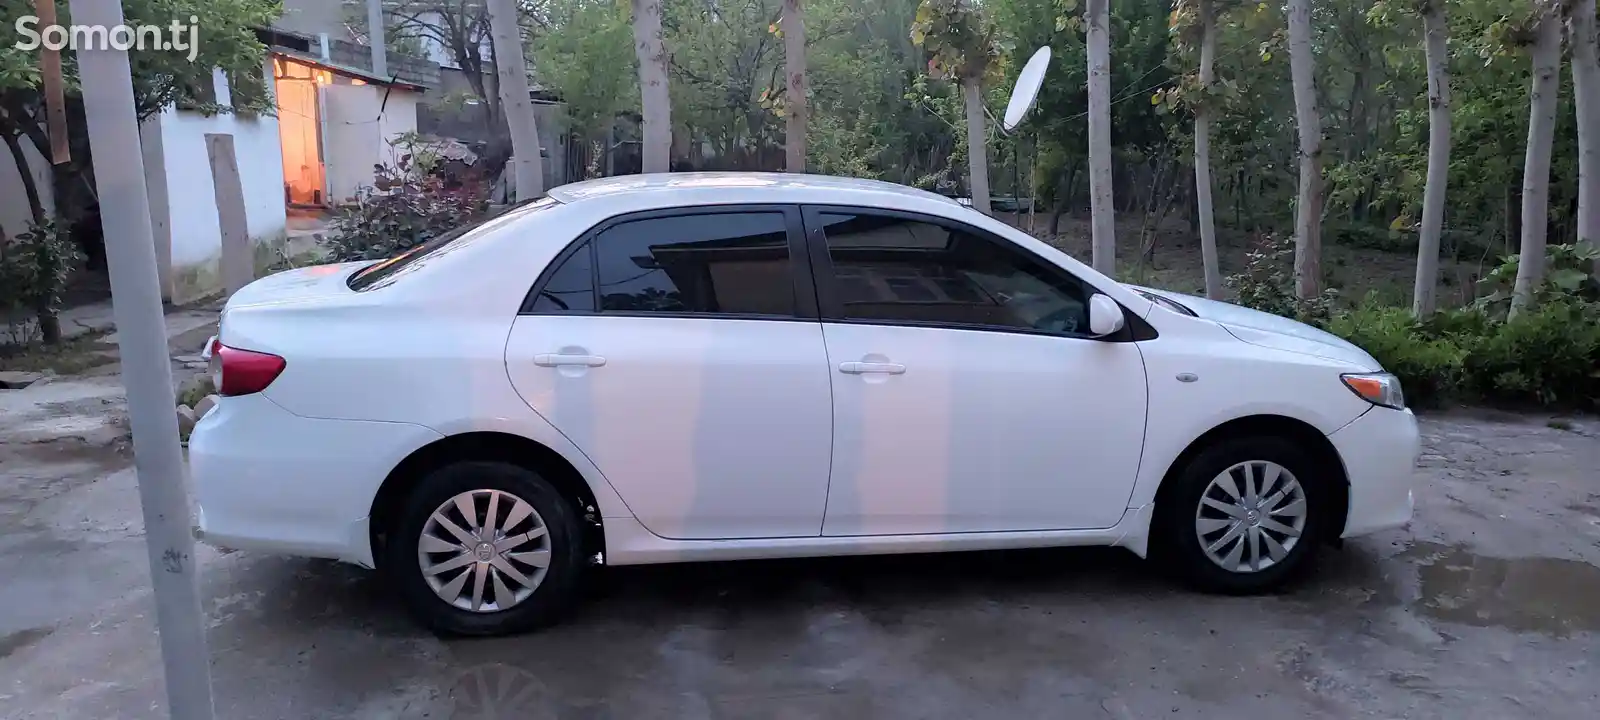 Toyota Corolla, 2012-2